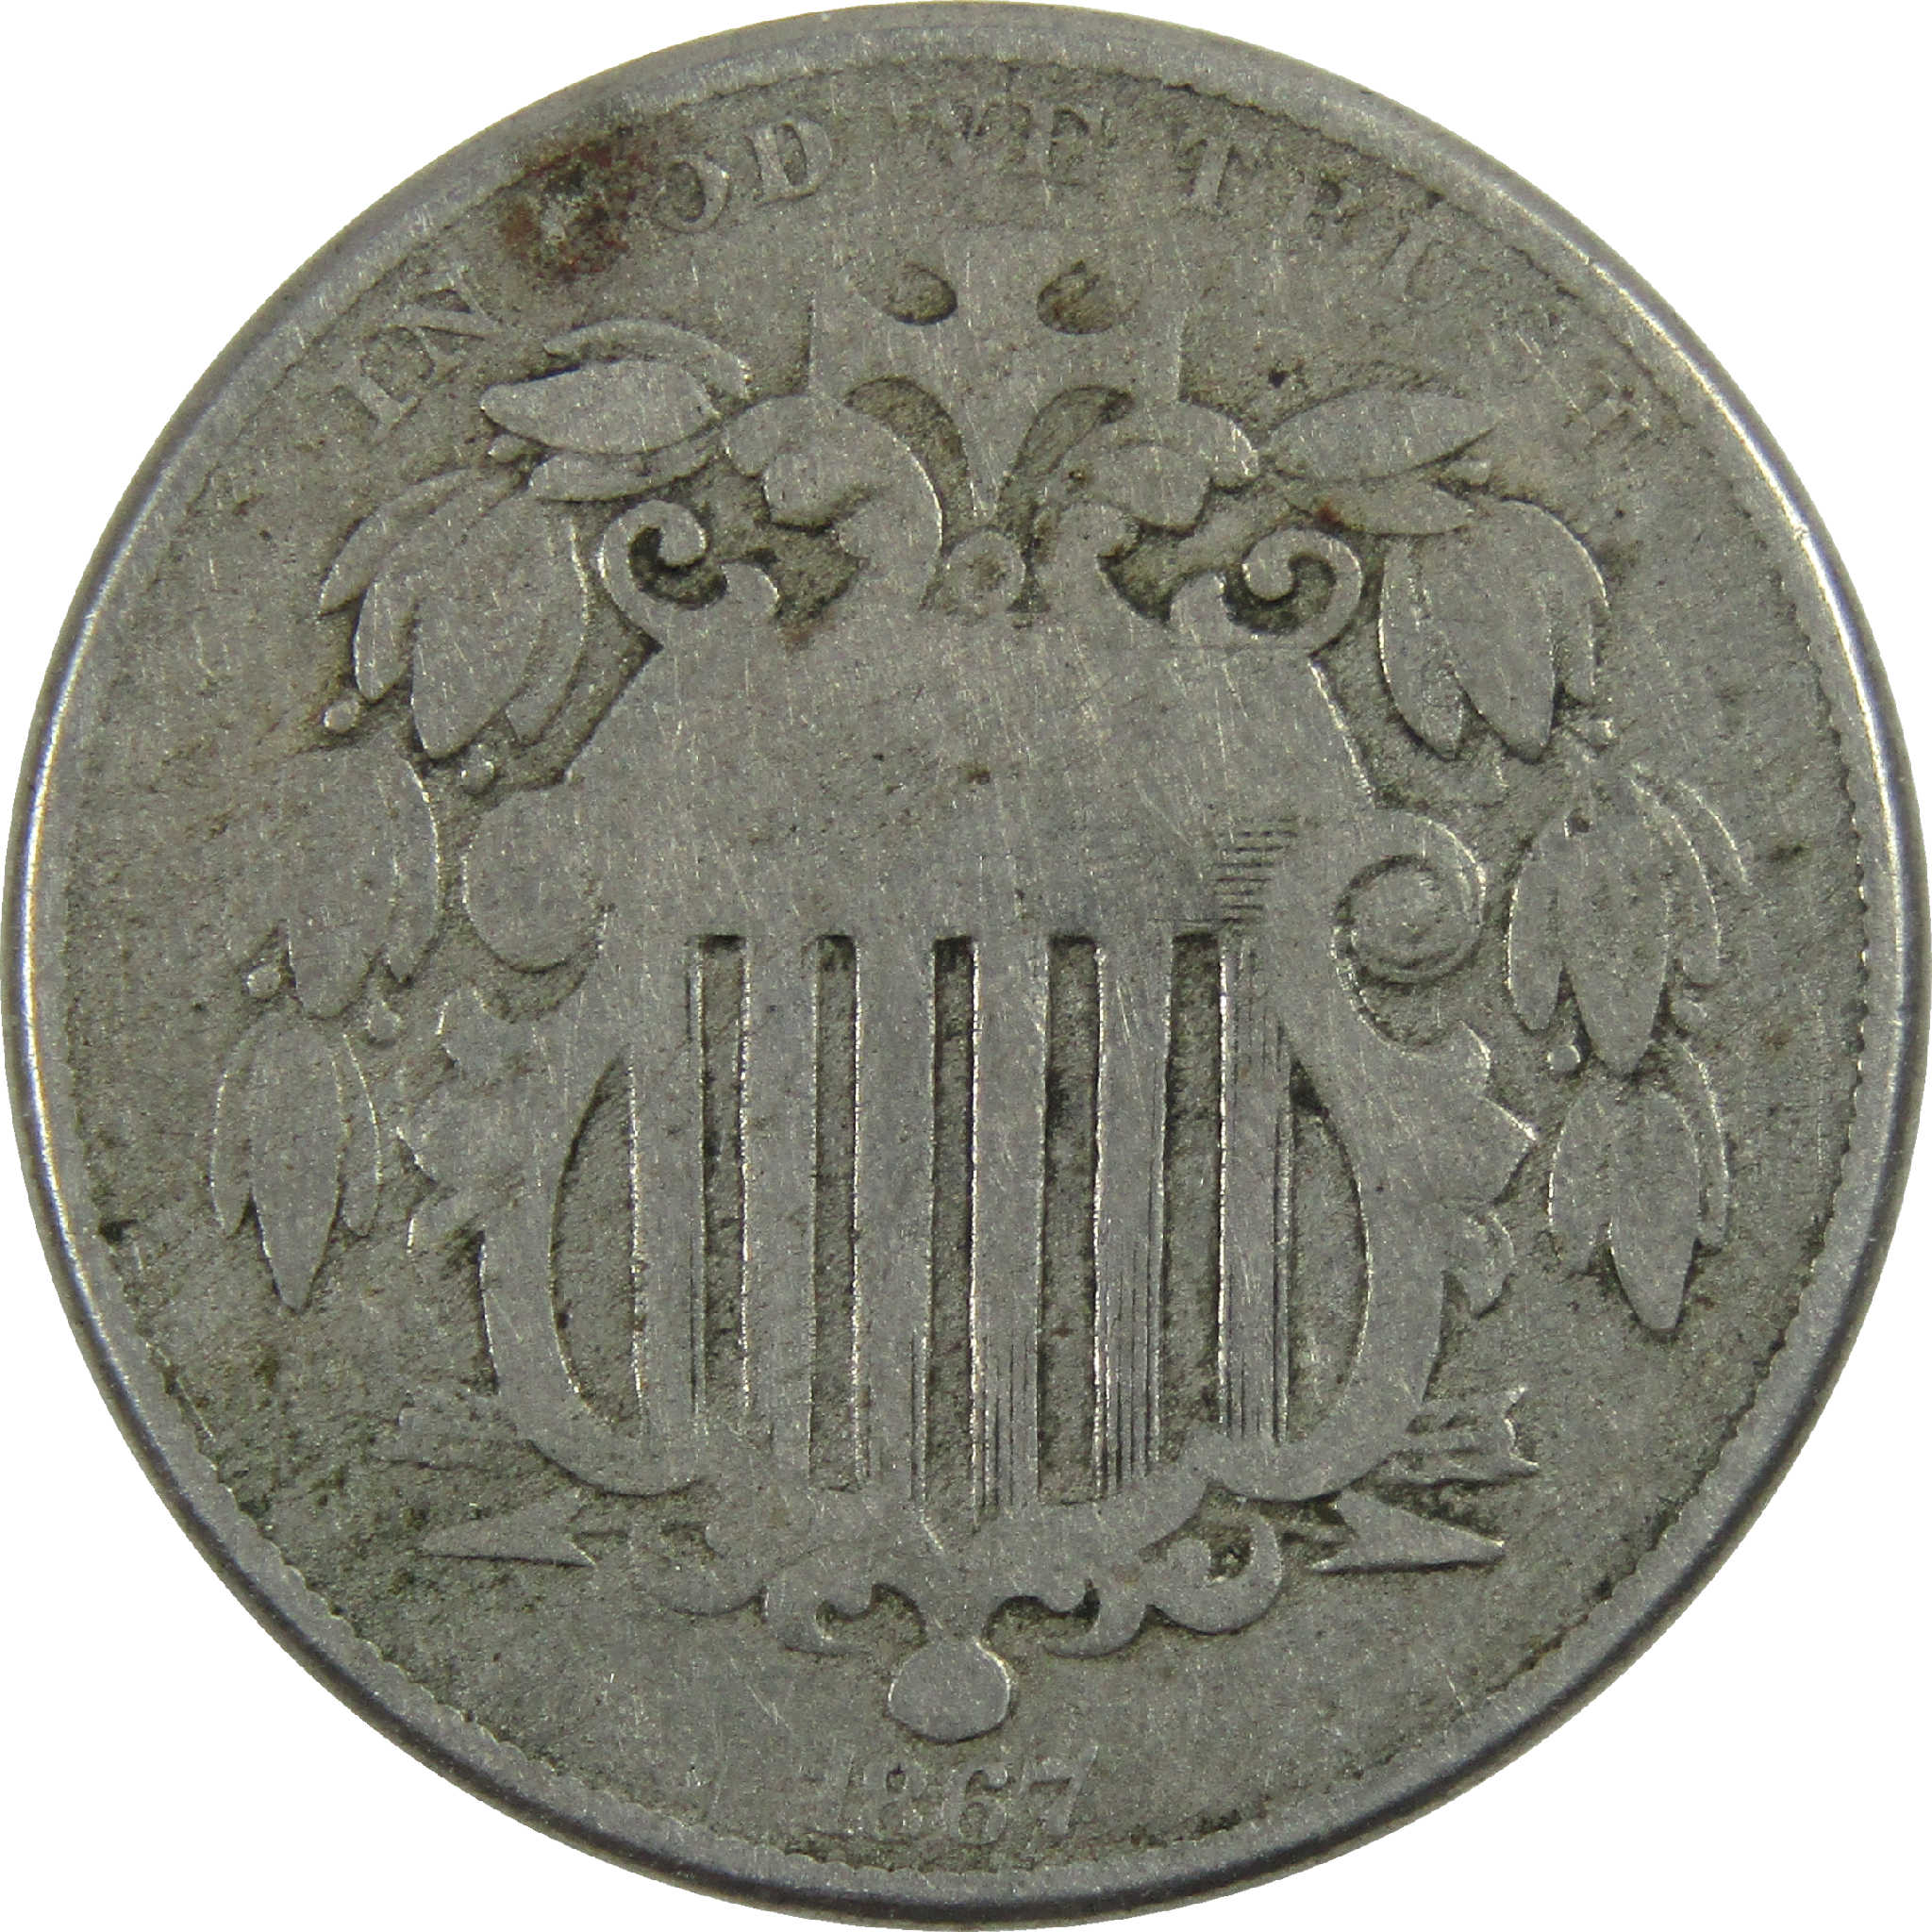 1867 No Rays Shield Nickel VG Very Good Details 5c Coin SKU:I12253